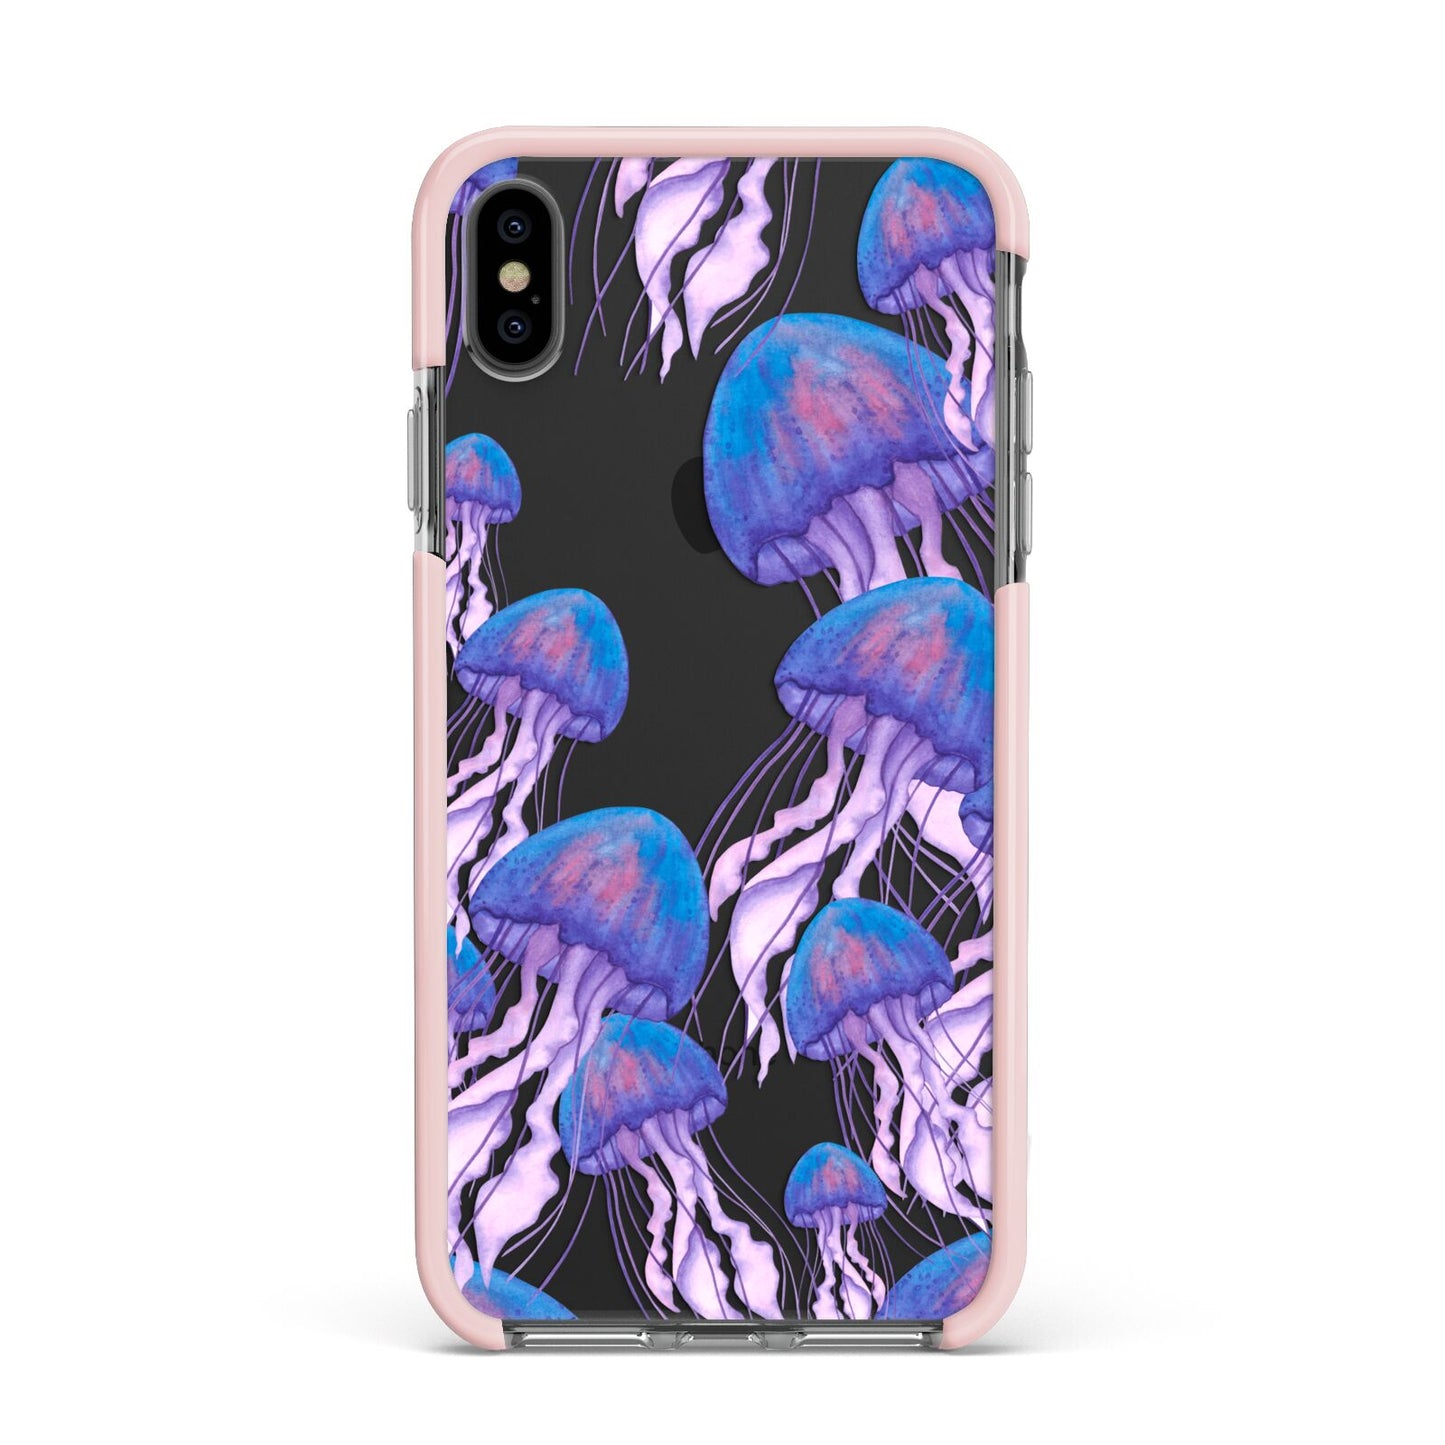 Jellyfish Apple iPhone Xs Max Impact Case Pink Edge on Black Phone